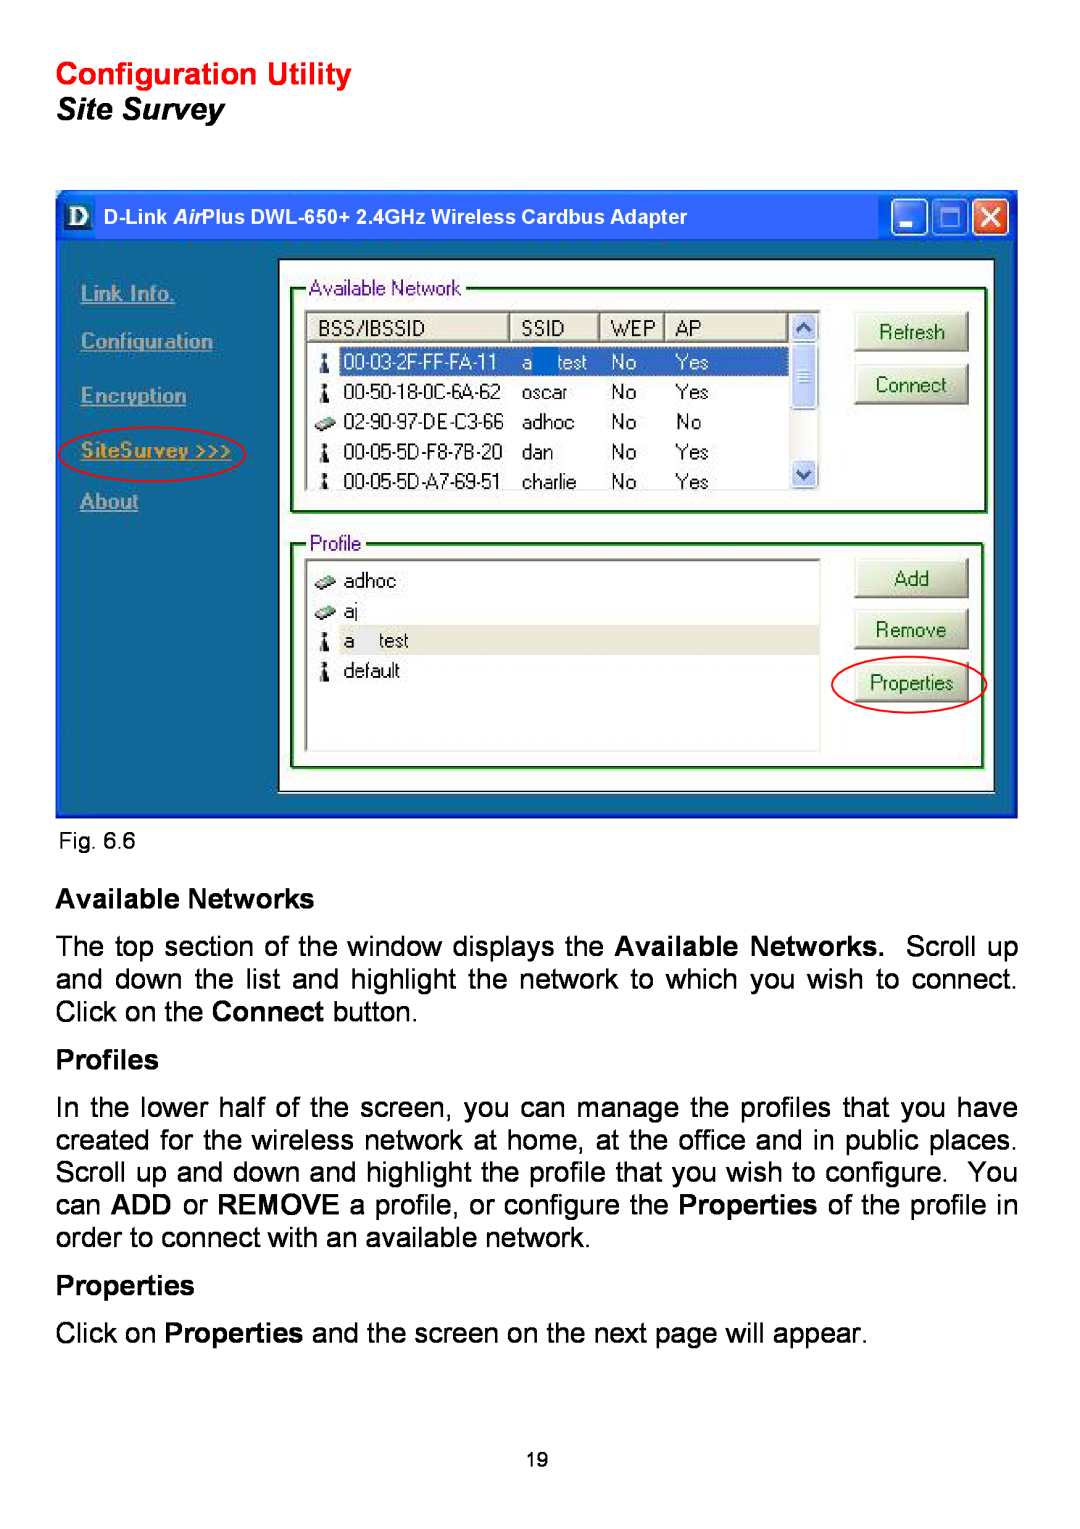 D-Link DWL-650+ manual Site Survey, Available Networks, Profiles, Properties, Configuration Utility 